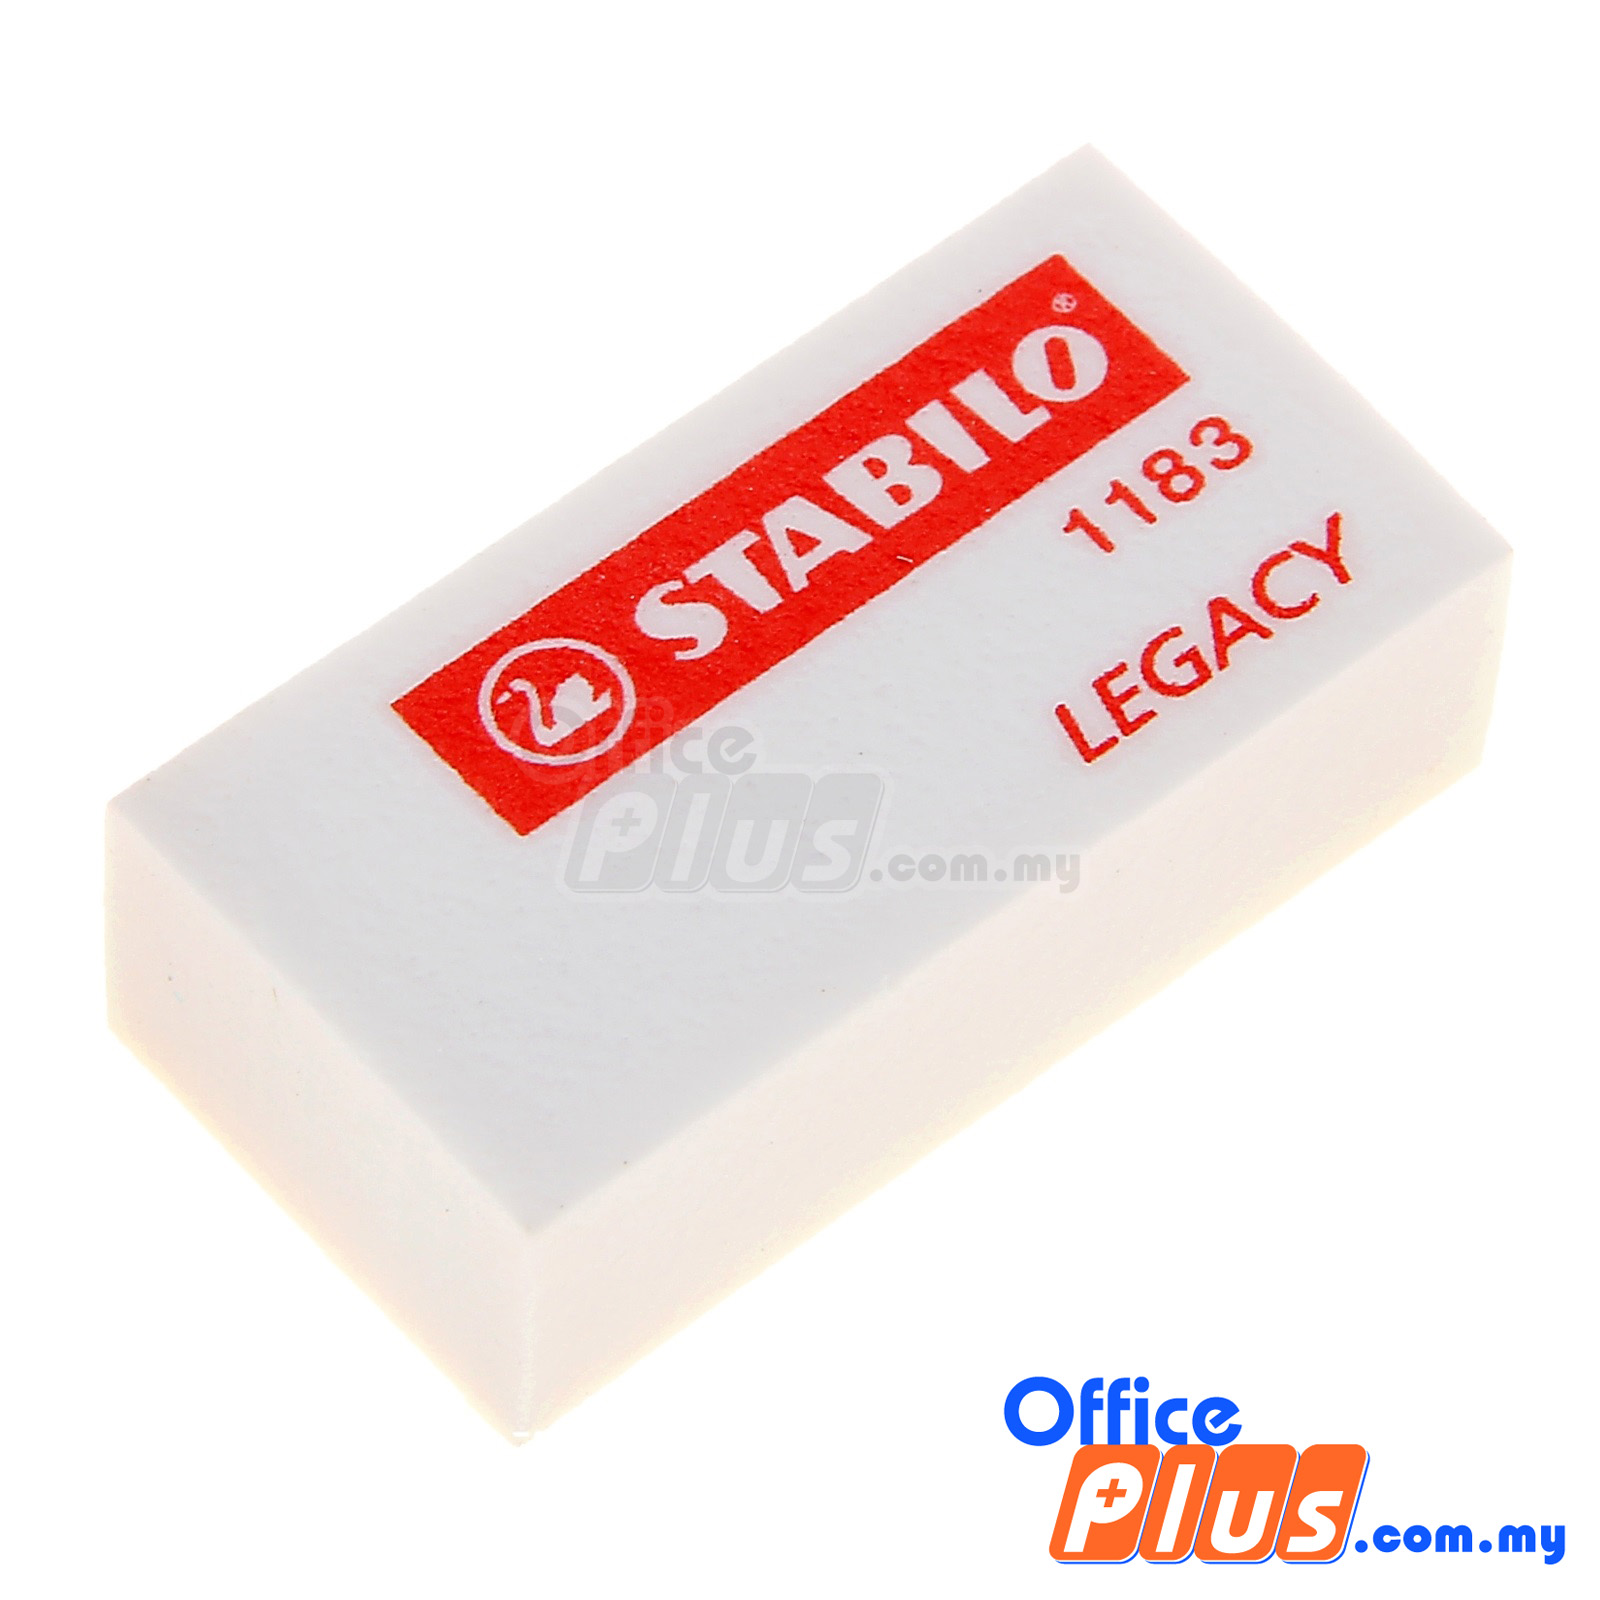 Stabilo Legacy Eraser (1183) - 6 pieces -